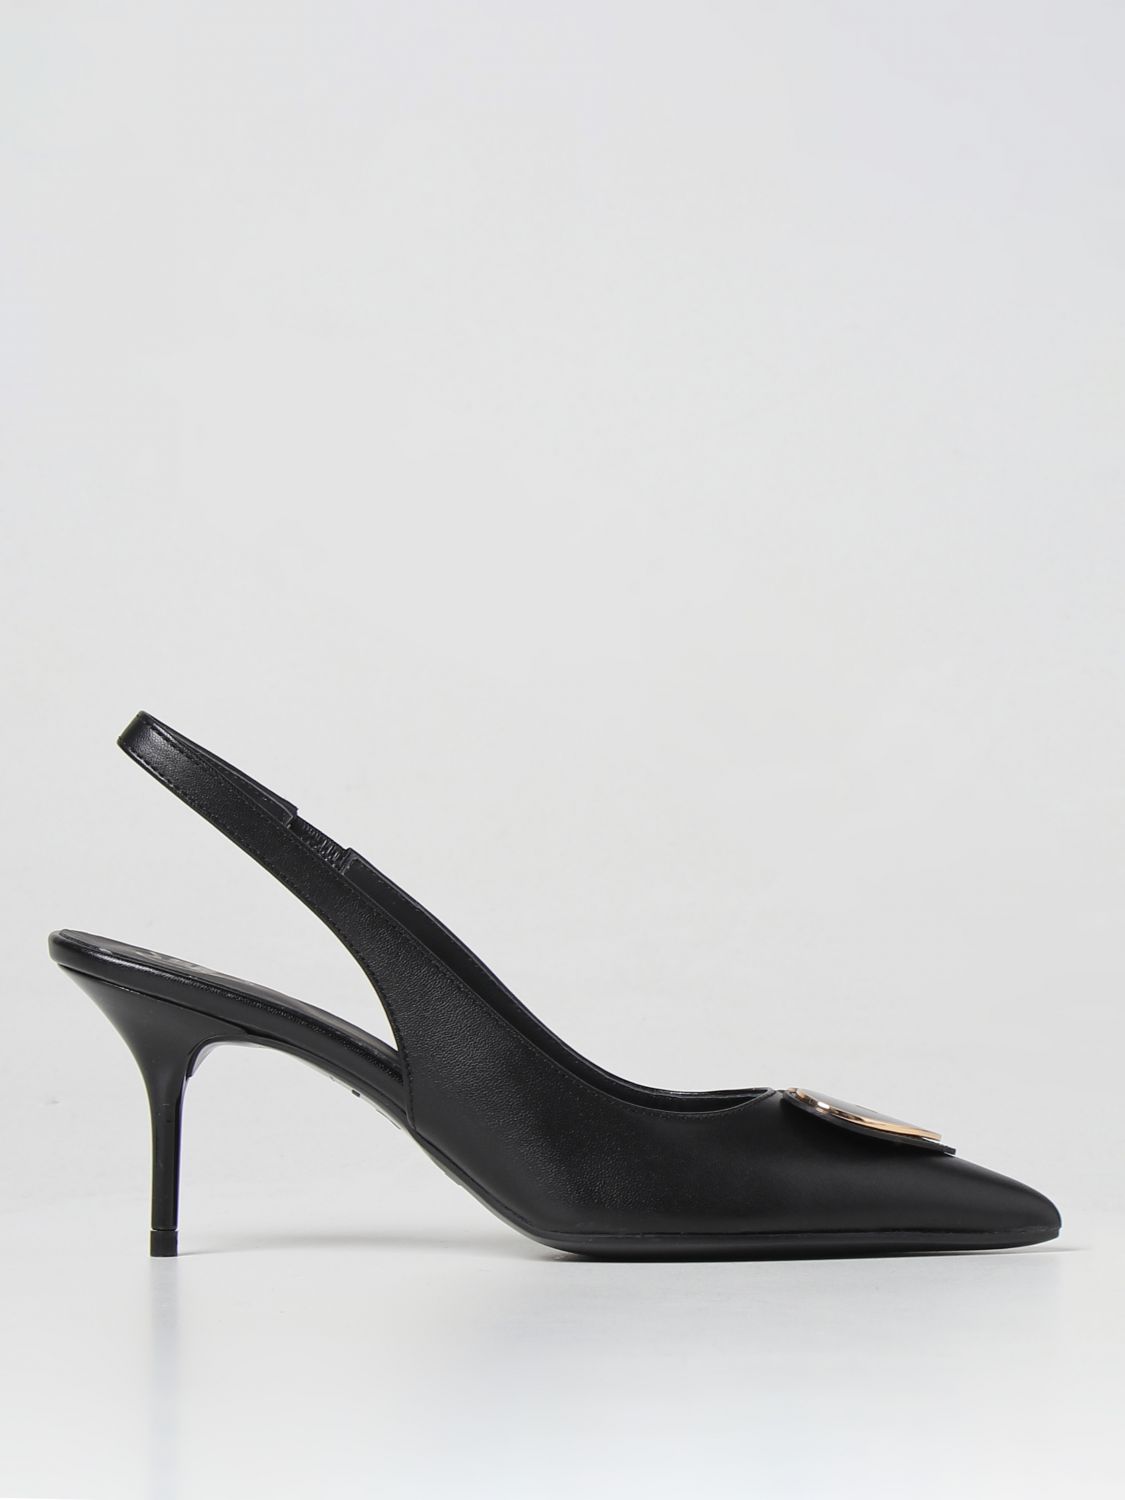 Verblinding Omtrek Nauwkeurig LOVE MOSCHINO: high heel shoes for woman - Black | Love Moschino high heel  shoes JA10197G1GIE0 online on GIGLIO.COM